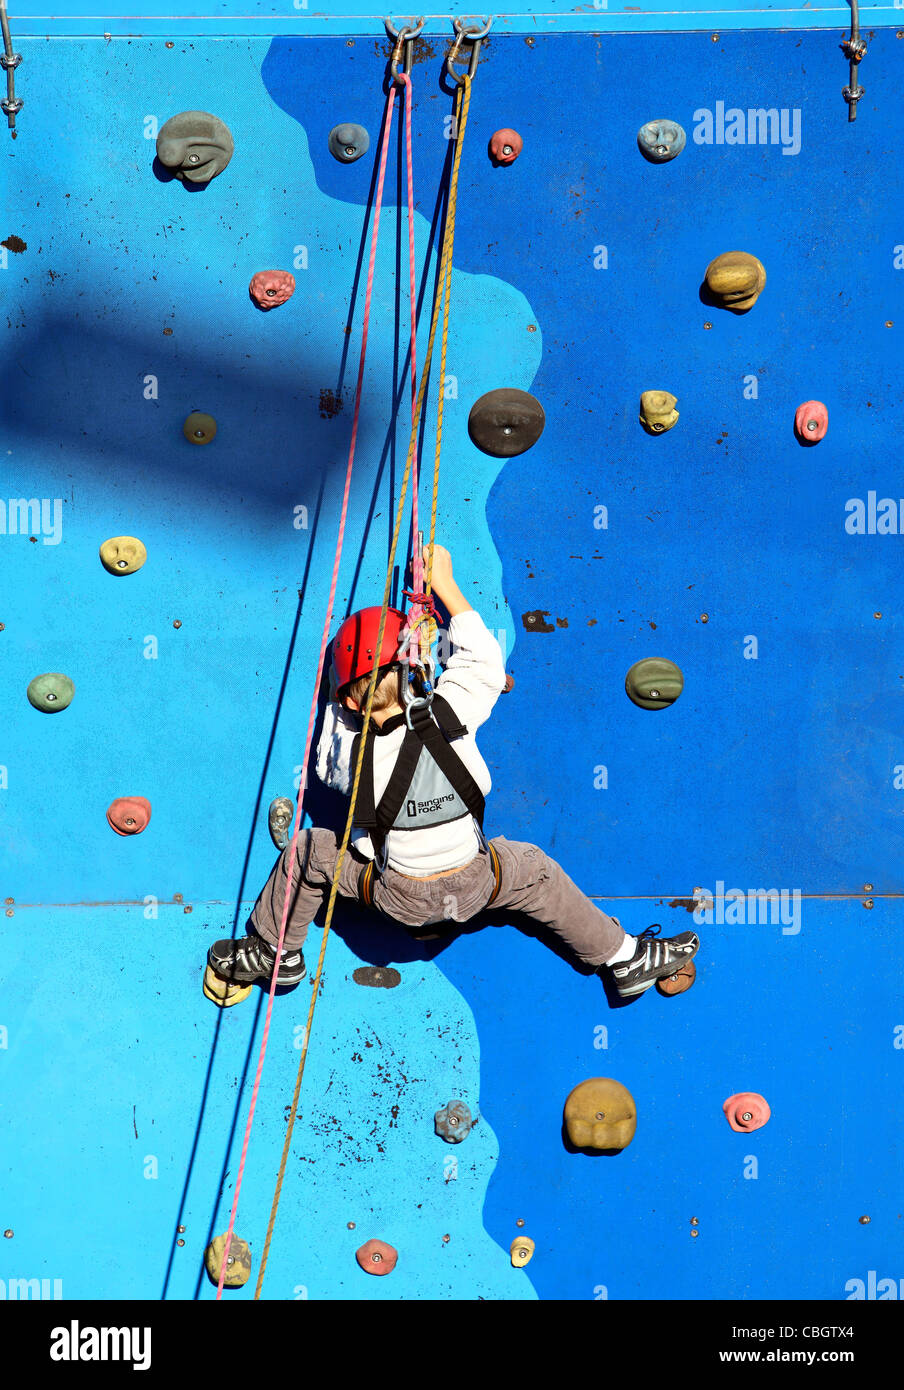 Young boy at a climbing wall. Stock Photo